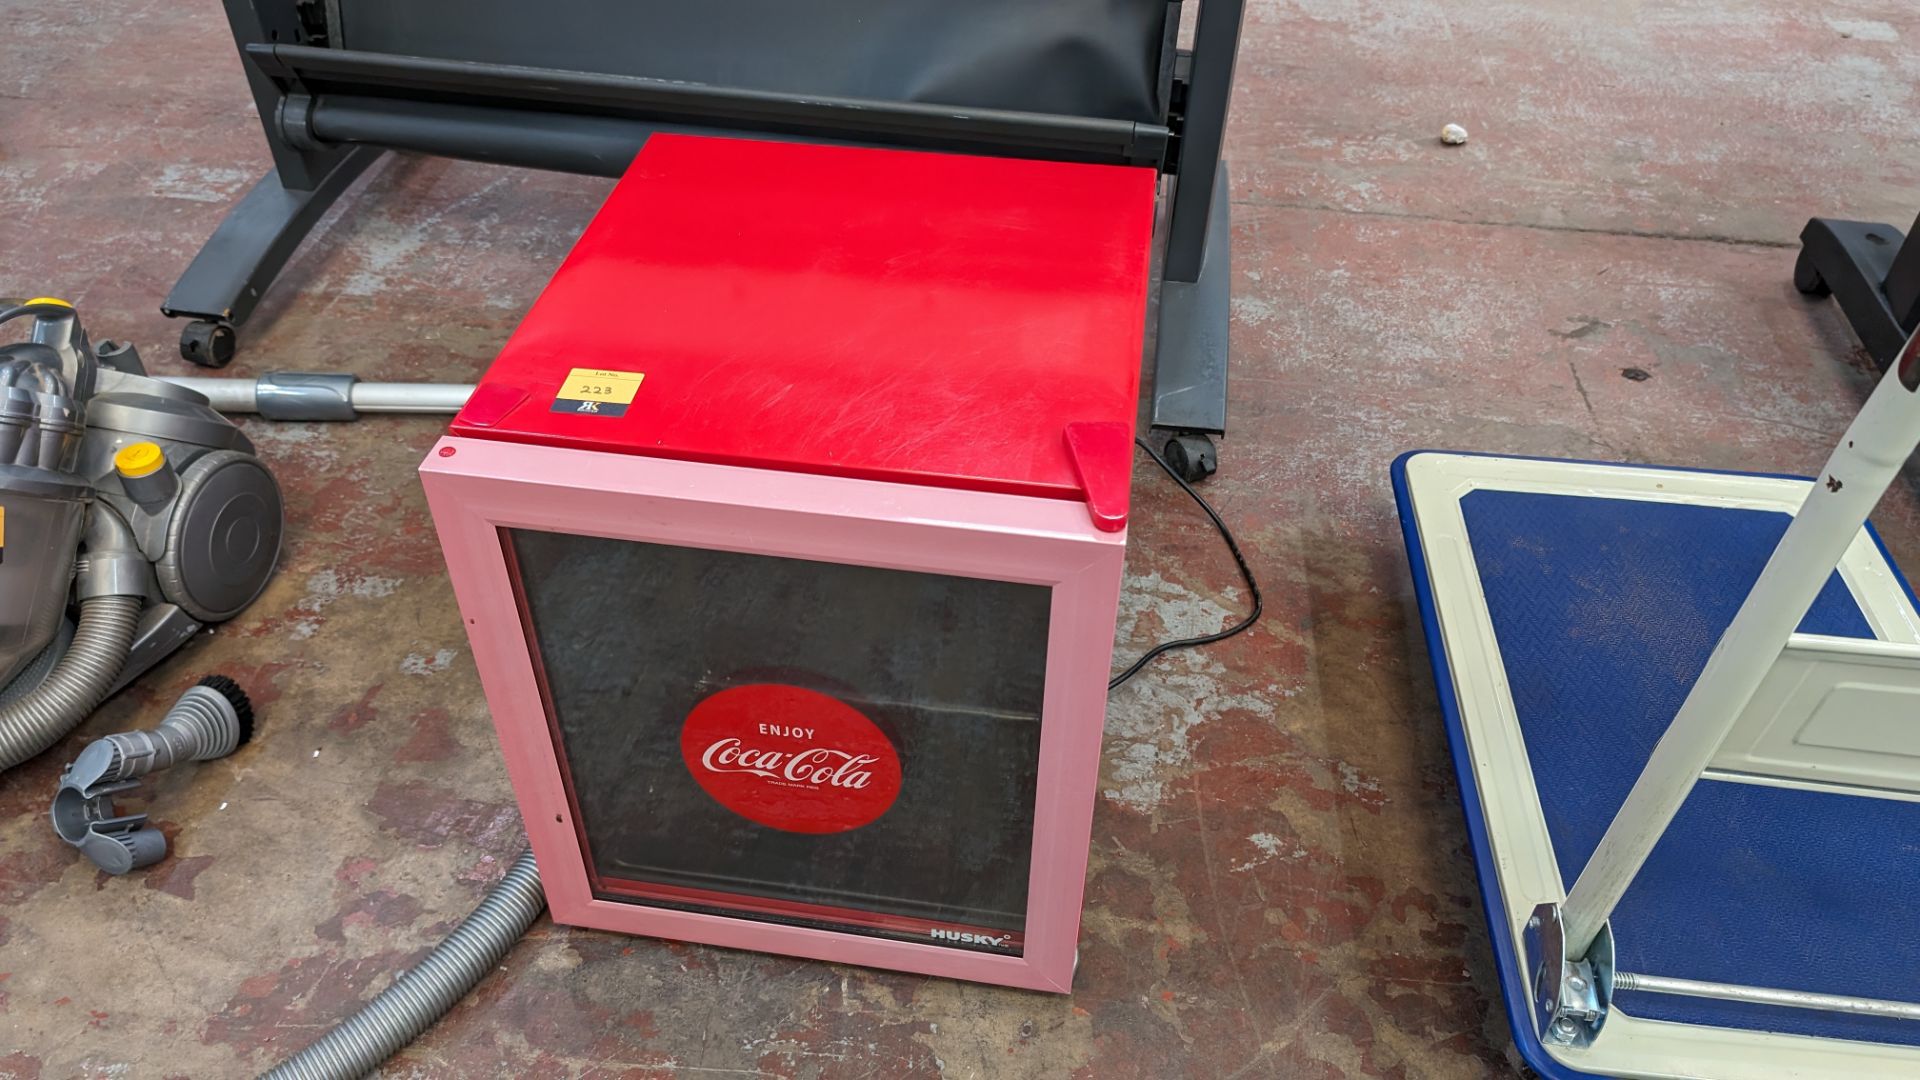 Husky clear front drinks fridge with Coca Cola branding